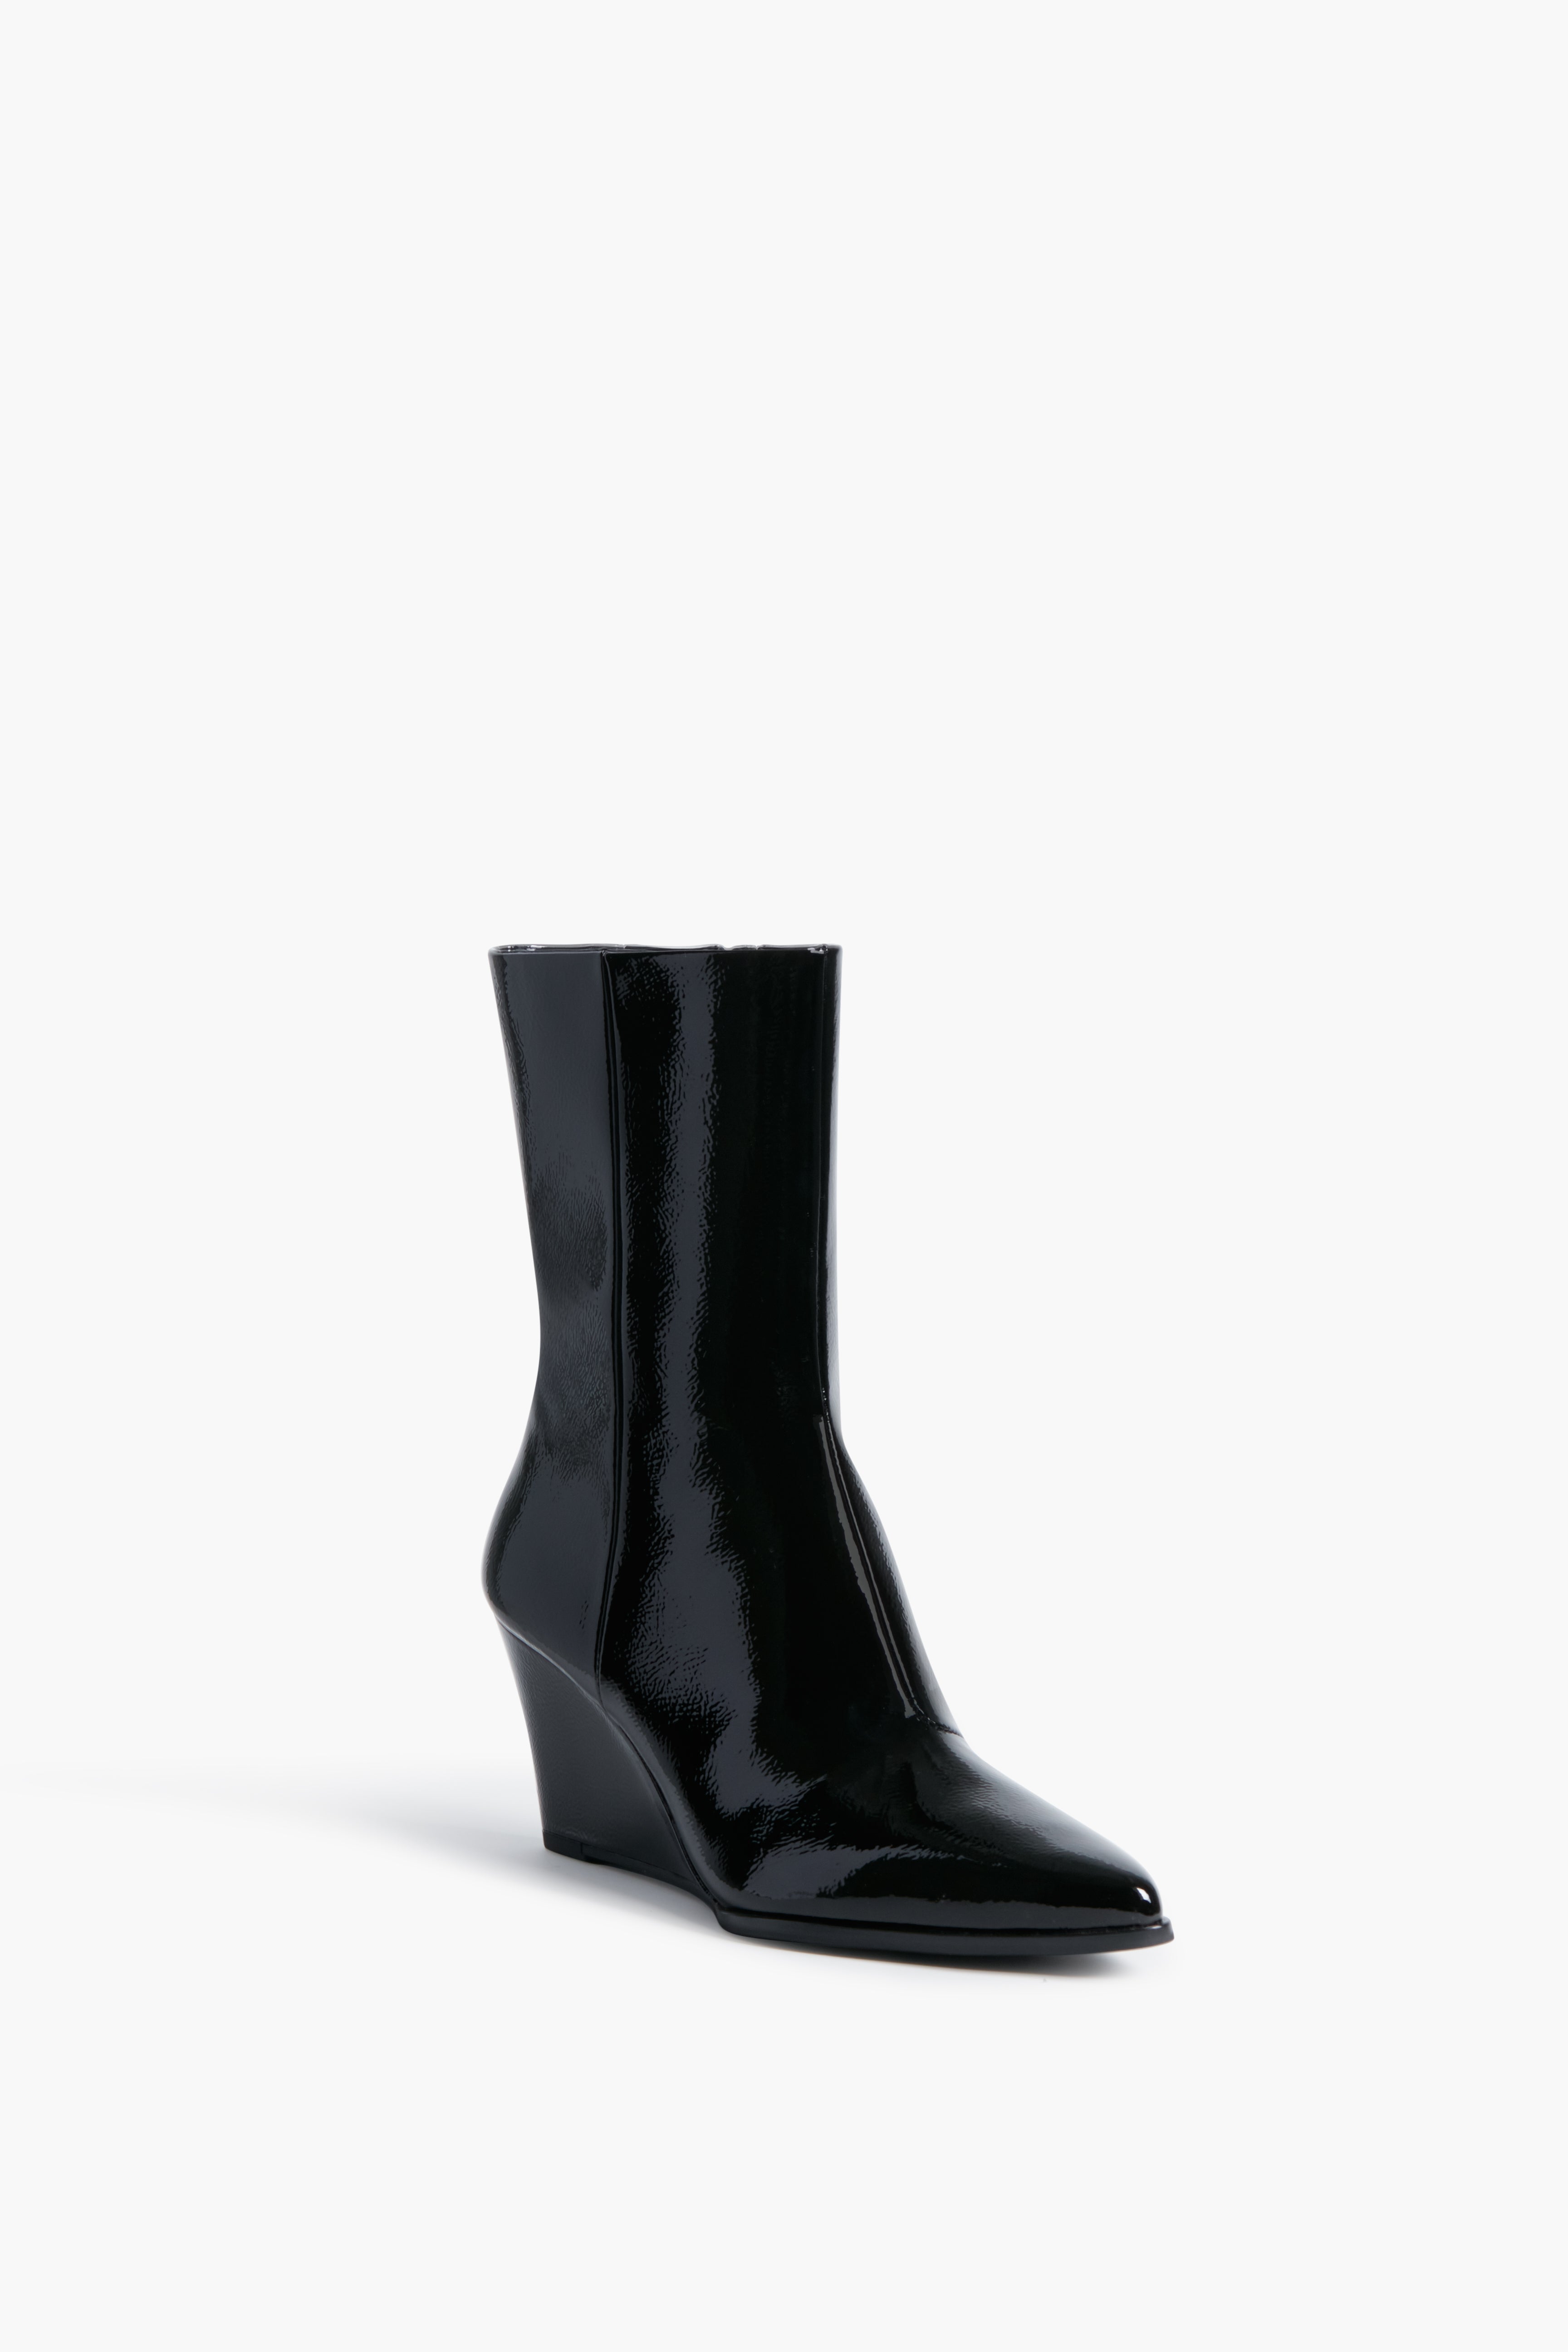 VAVA Black Paris Stiletto Heels | Women's Towering Stiletto Heels – Steve  Madden